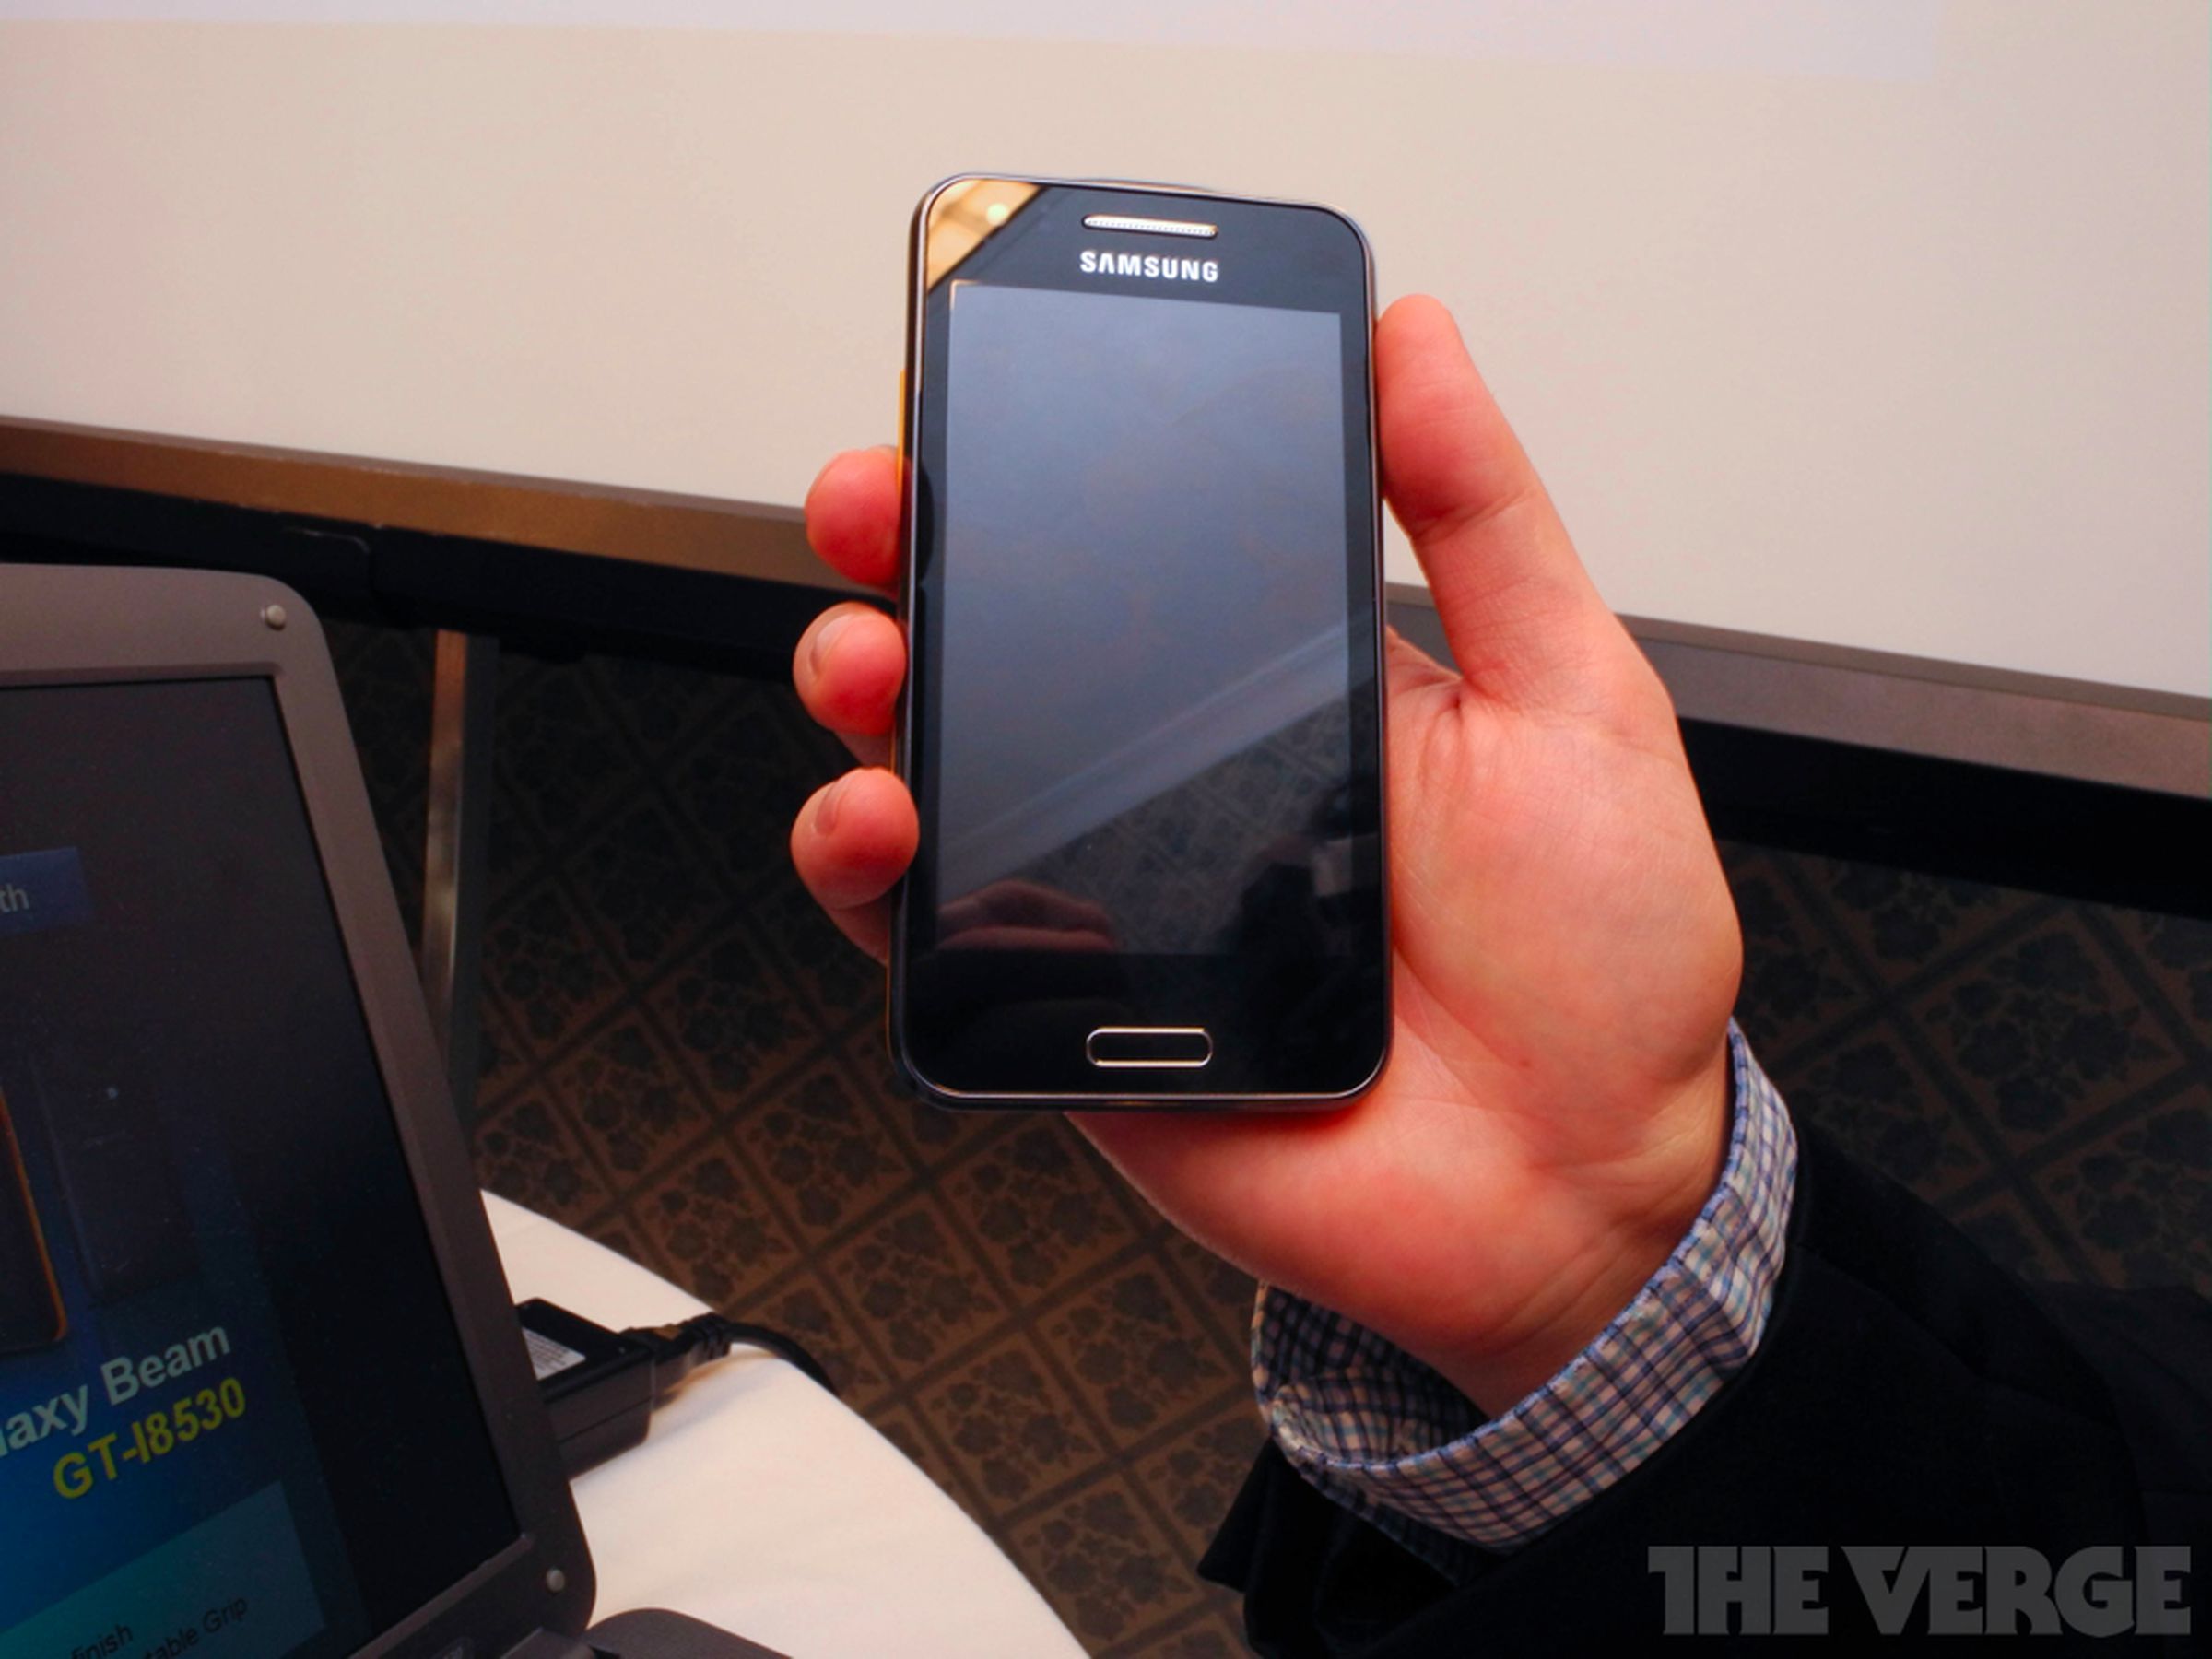 Samsung Galaxy Beam hands-on